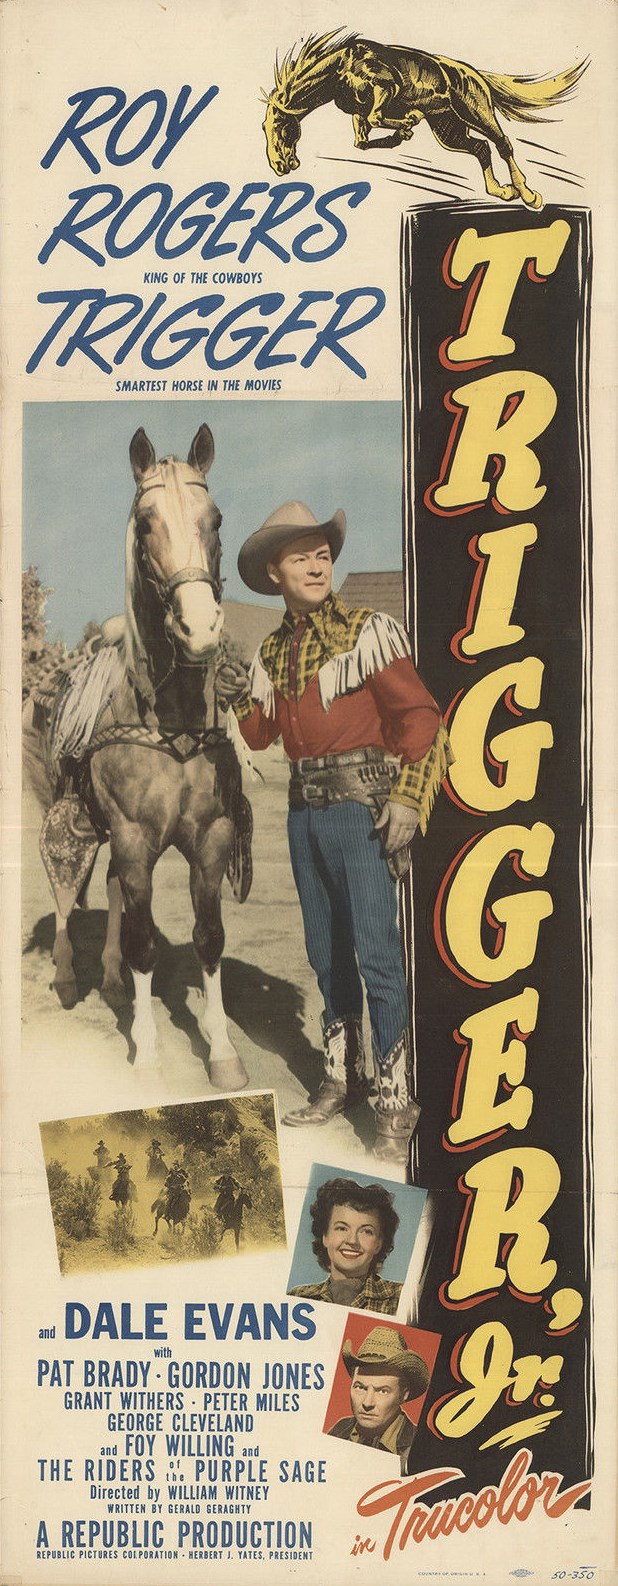 Trigger, Jr. - Posters